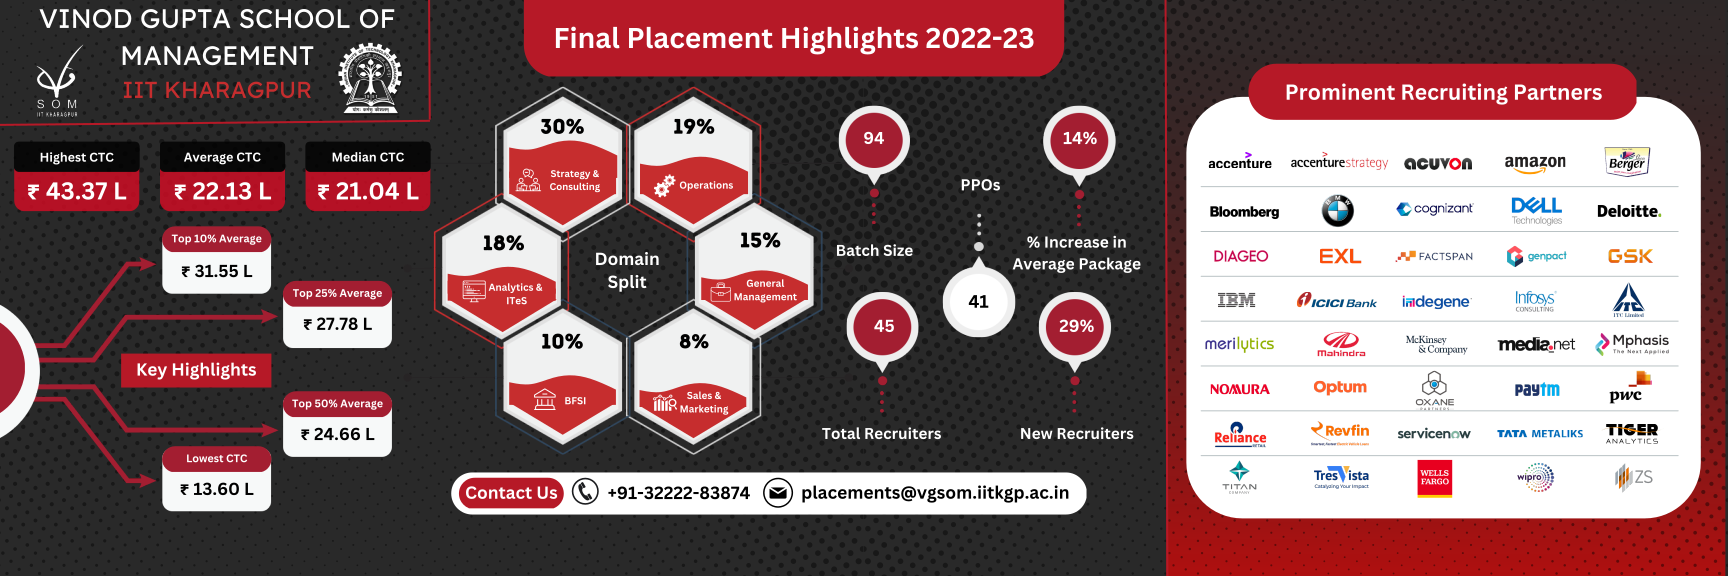 Final Placement Highlights 2022-23